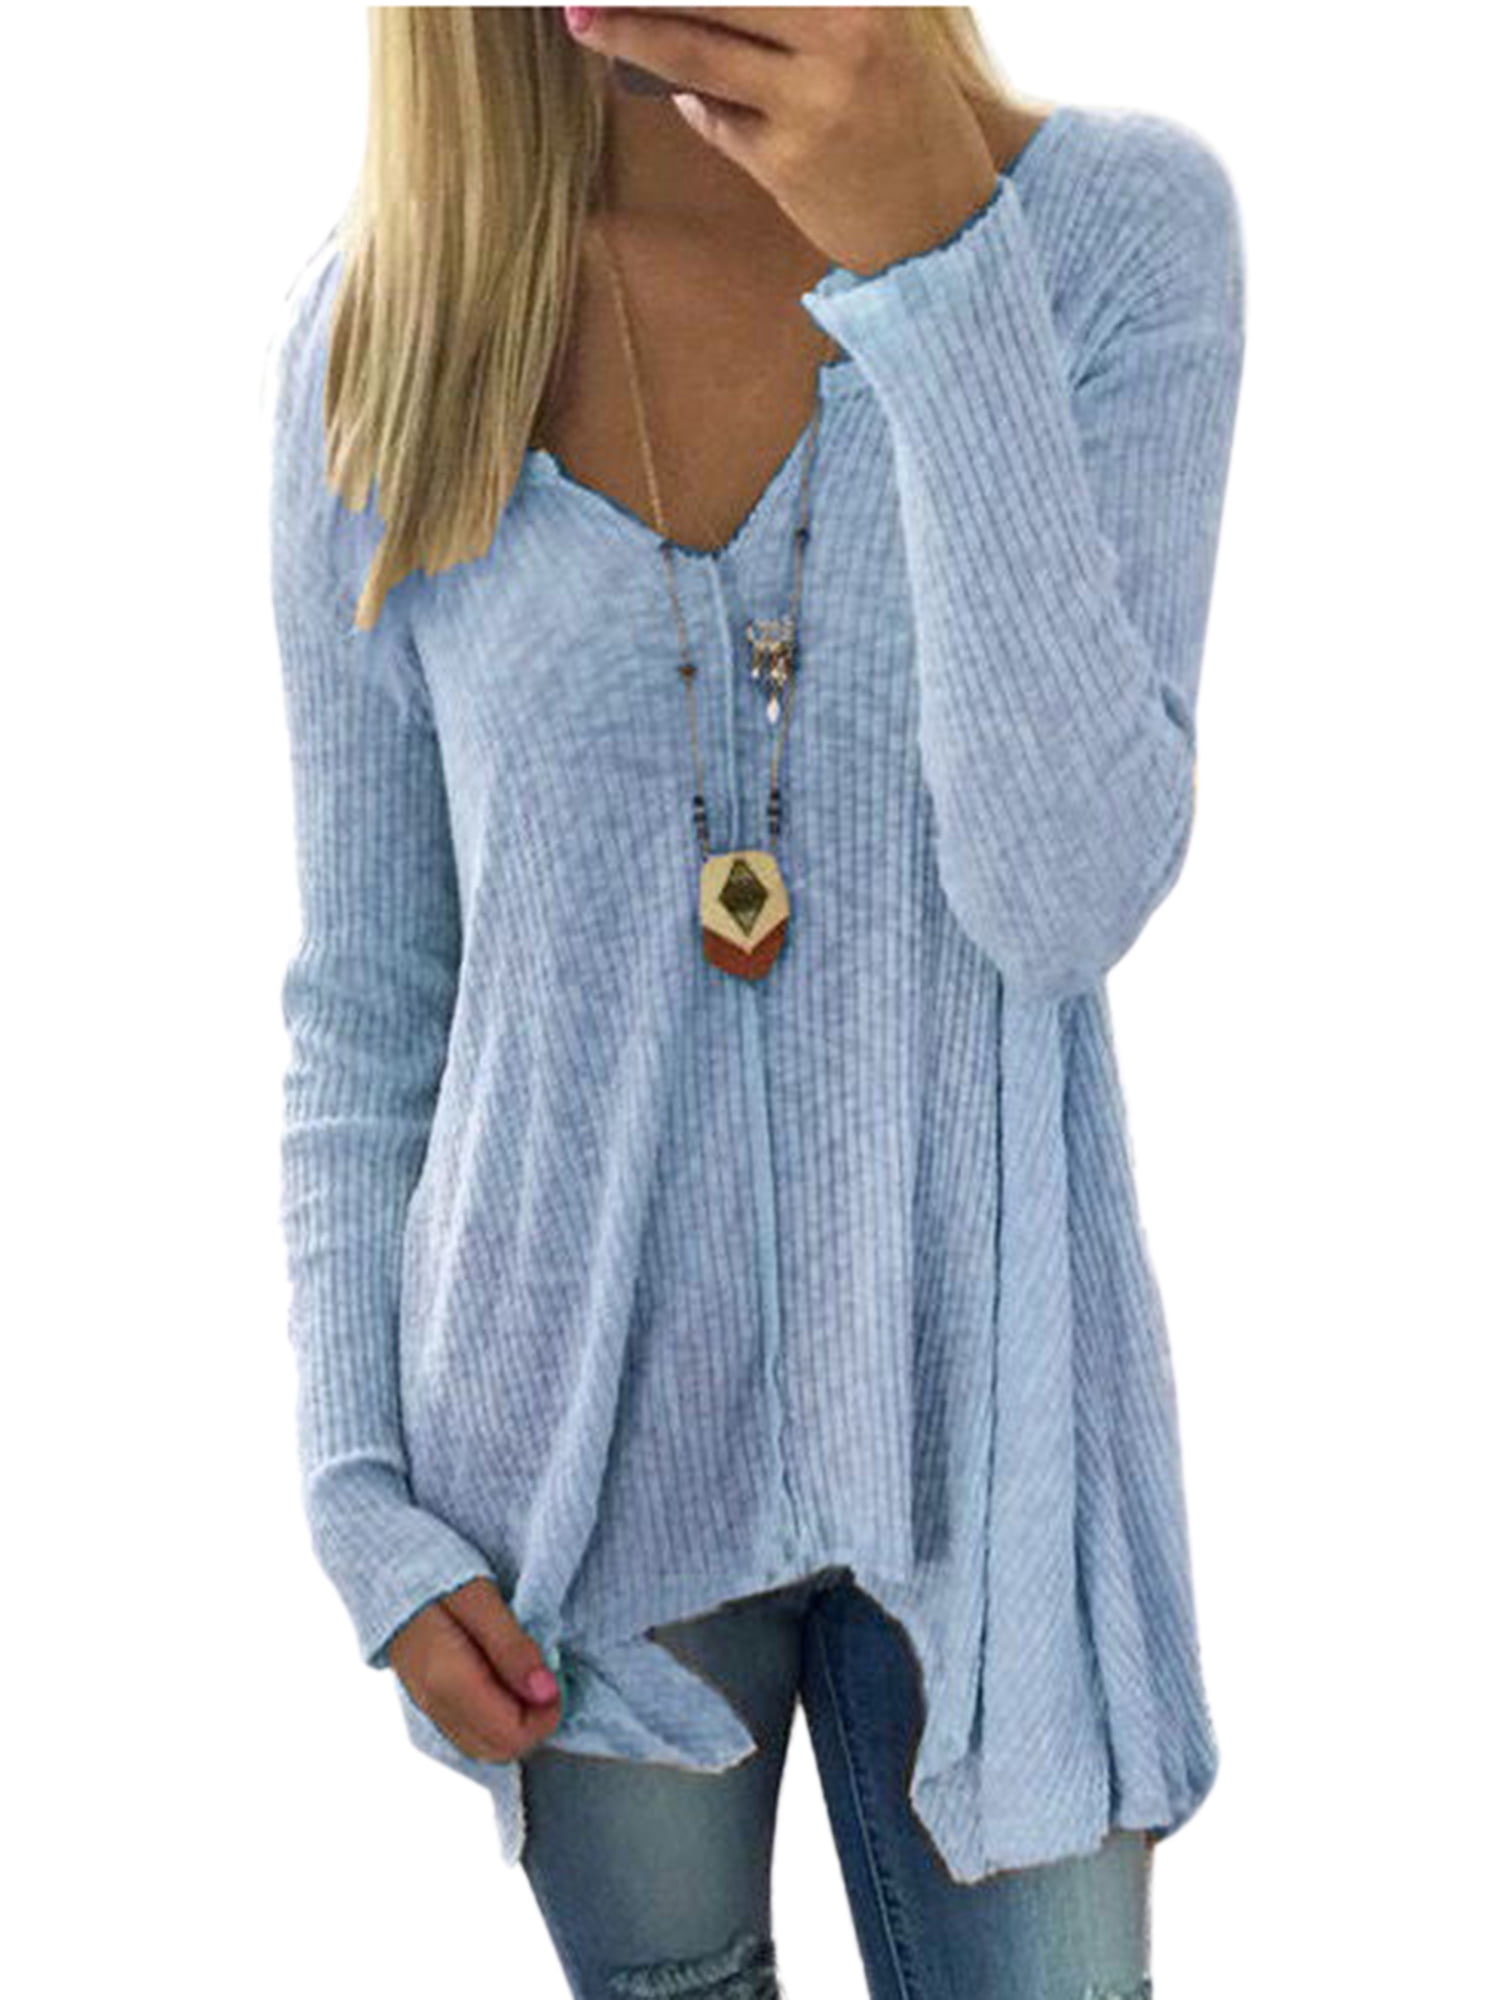 Venice zara 34 sleeve sweater plus size shirt fire hot, Cheap plus size dresses uk, royal blue short homecoming dresses. 